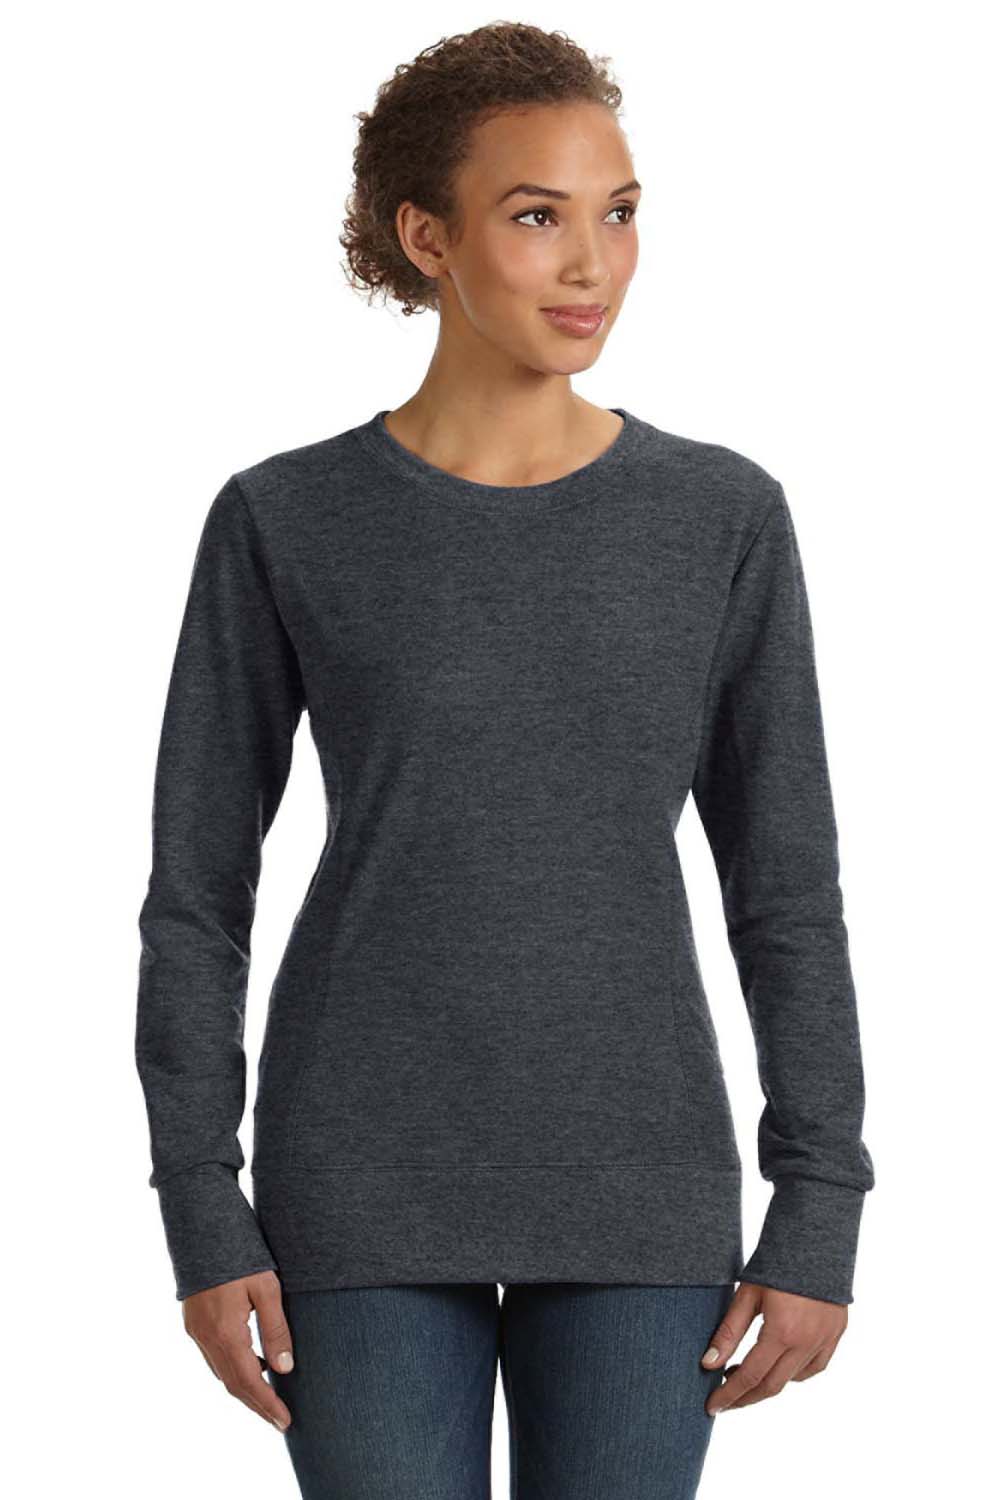 Anvil Womens French Terry Crewneck Sweatshirt 72000L - BigTopShirtShop.com